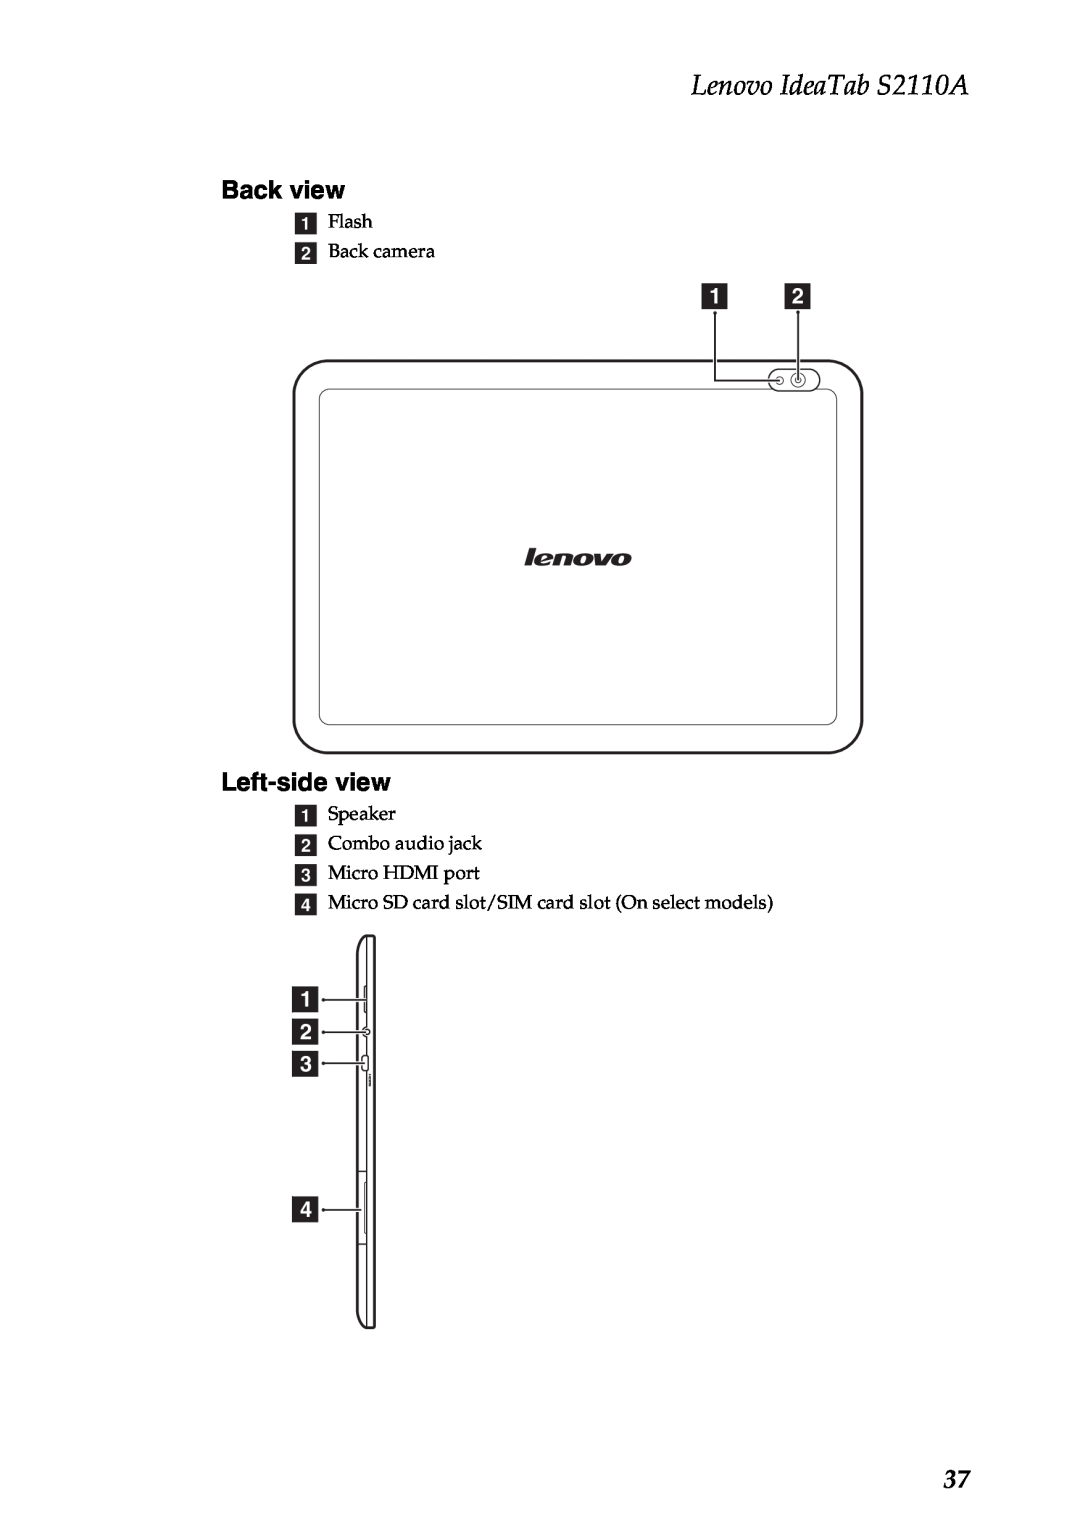 Lenovo manual Back view, Left-sideview, Lenovo IdeaTab S2110A, aFlash bBack camera, 1 2 